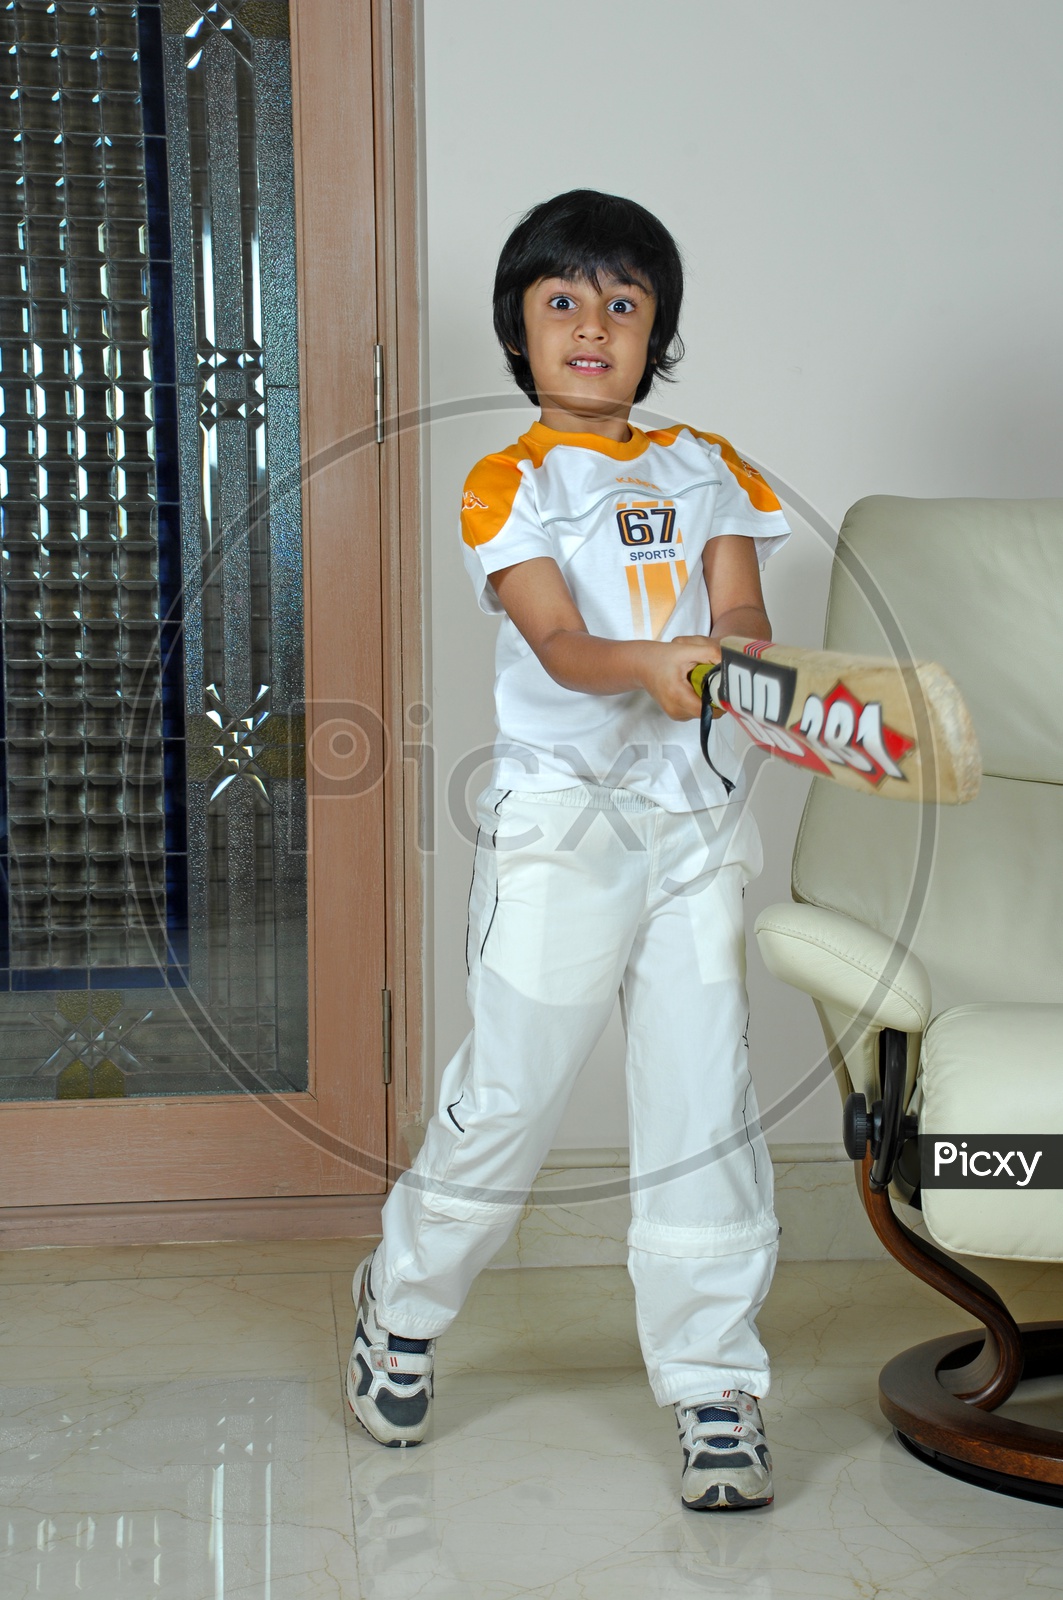 Indian boy holding cricket bat